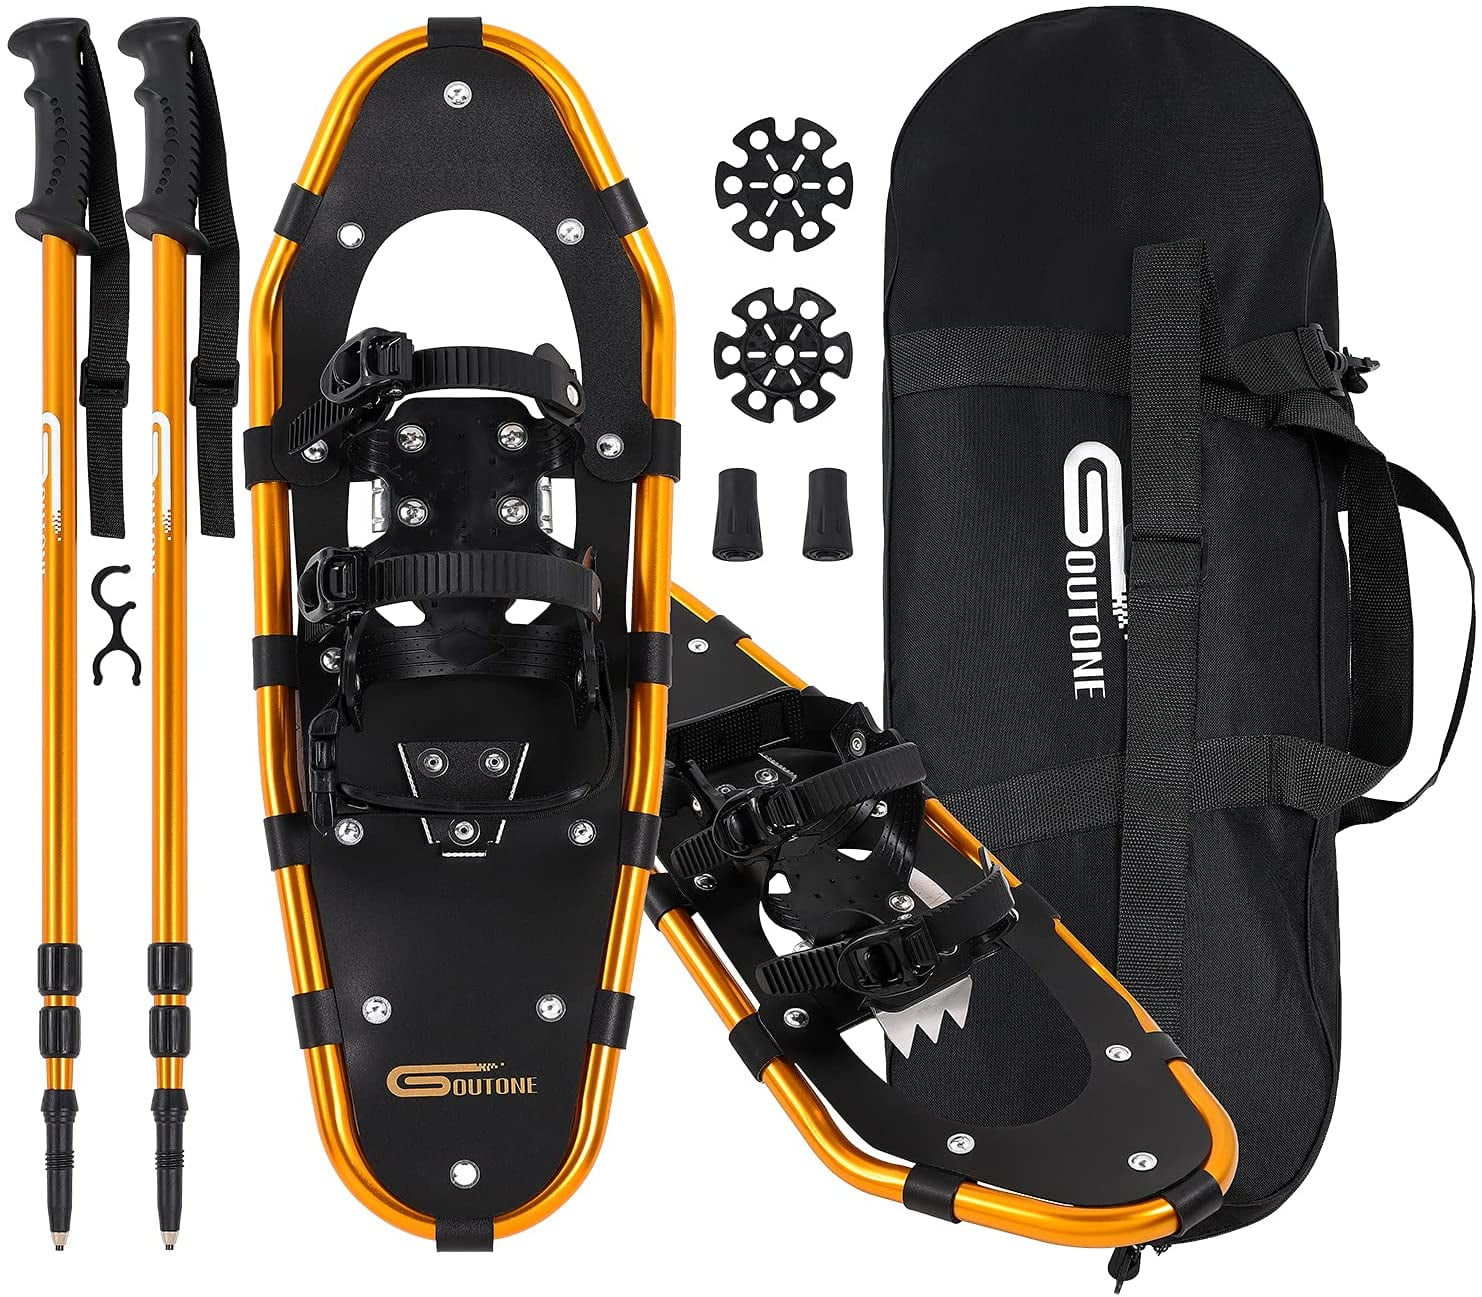 Xtrempro 2 Piece Trekking Adjustable Poles and Snowshoes Set Snow Terrain Kit Ergonomic Bundle Lightweight Aluminum with Carrying Tote Bag 